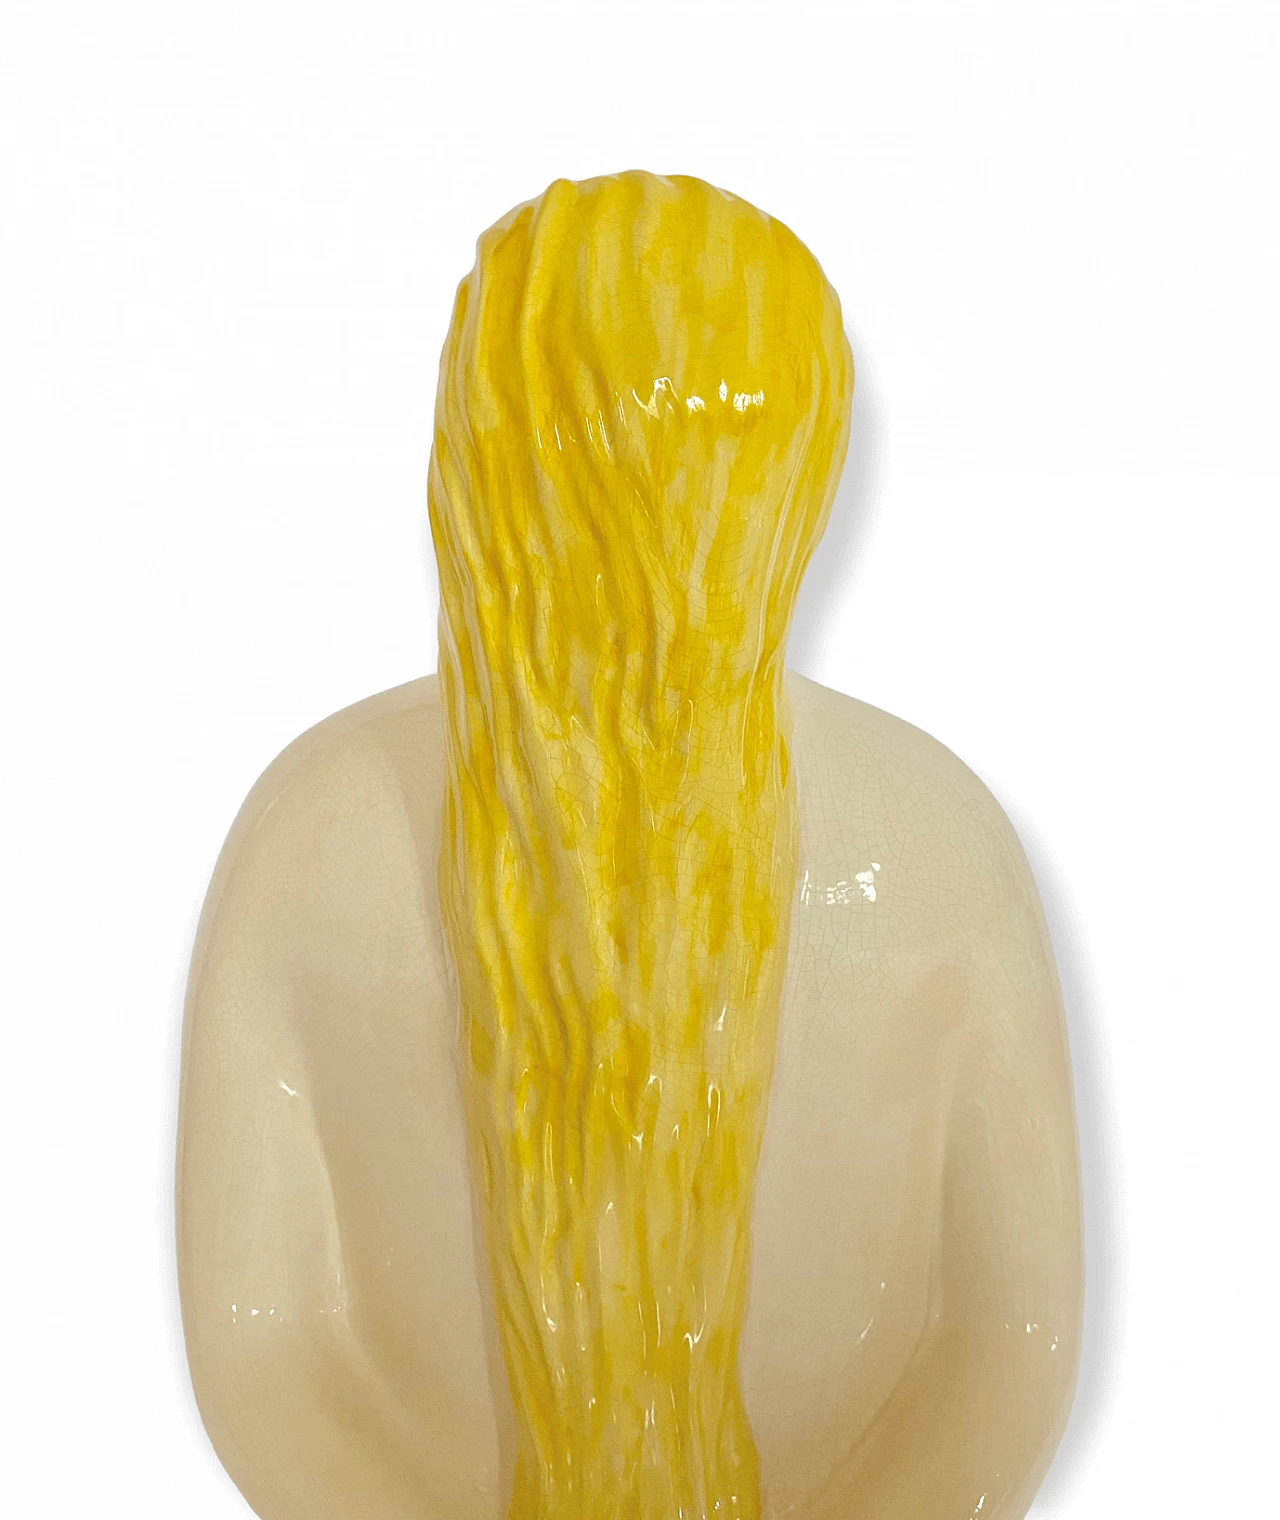 Ugo La Pietra, Bather, glazed ceramic sculpture, 1990 24